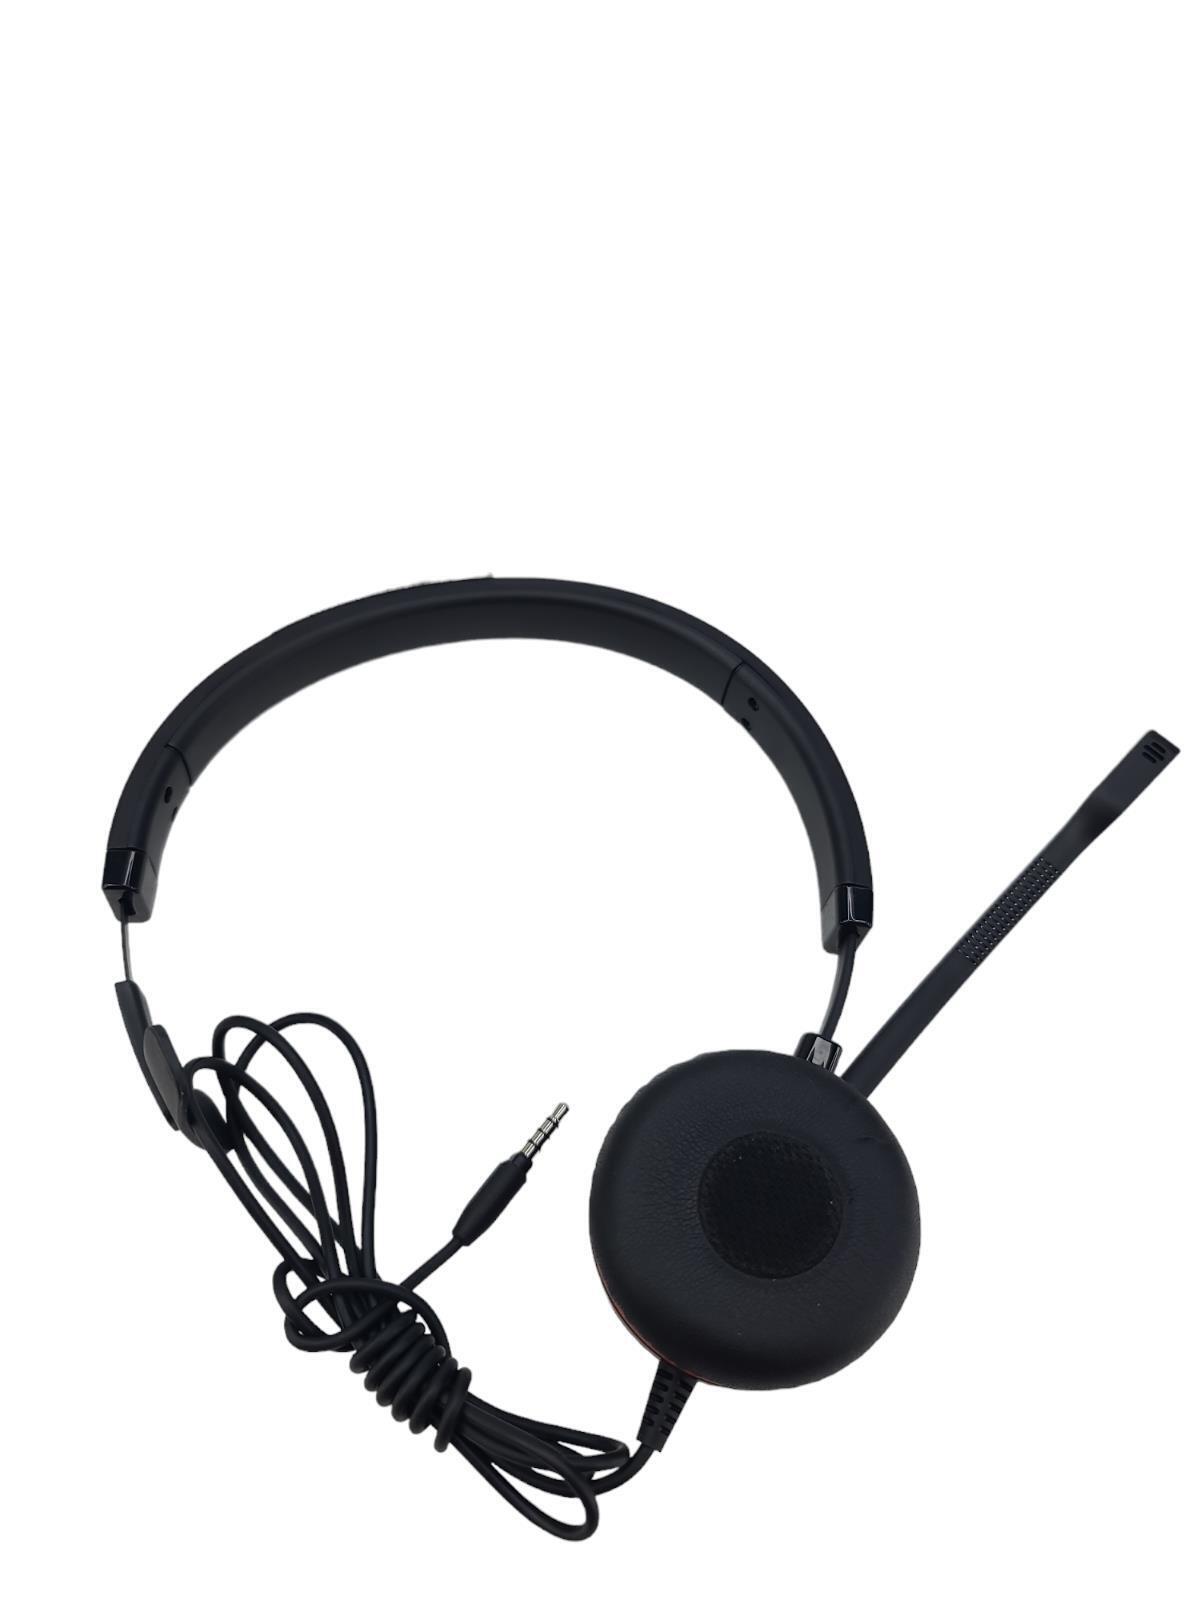 Jabra Evolve 30 II 2 HSC060 MS Wired Headset USB-A Mono Black #5393-823-309